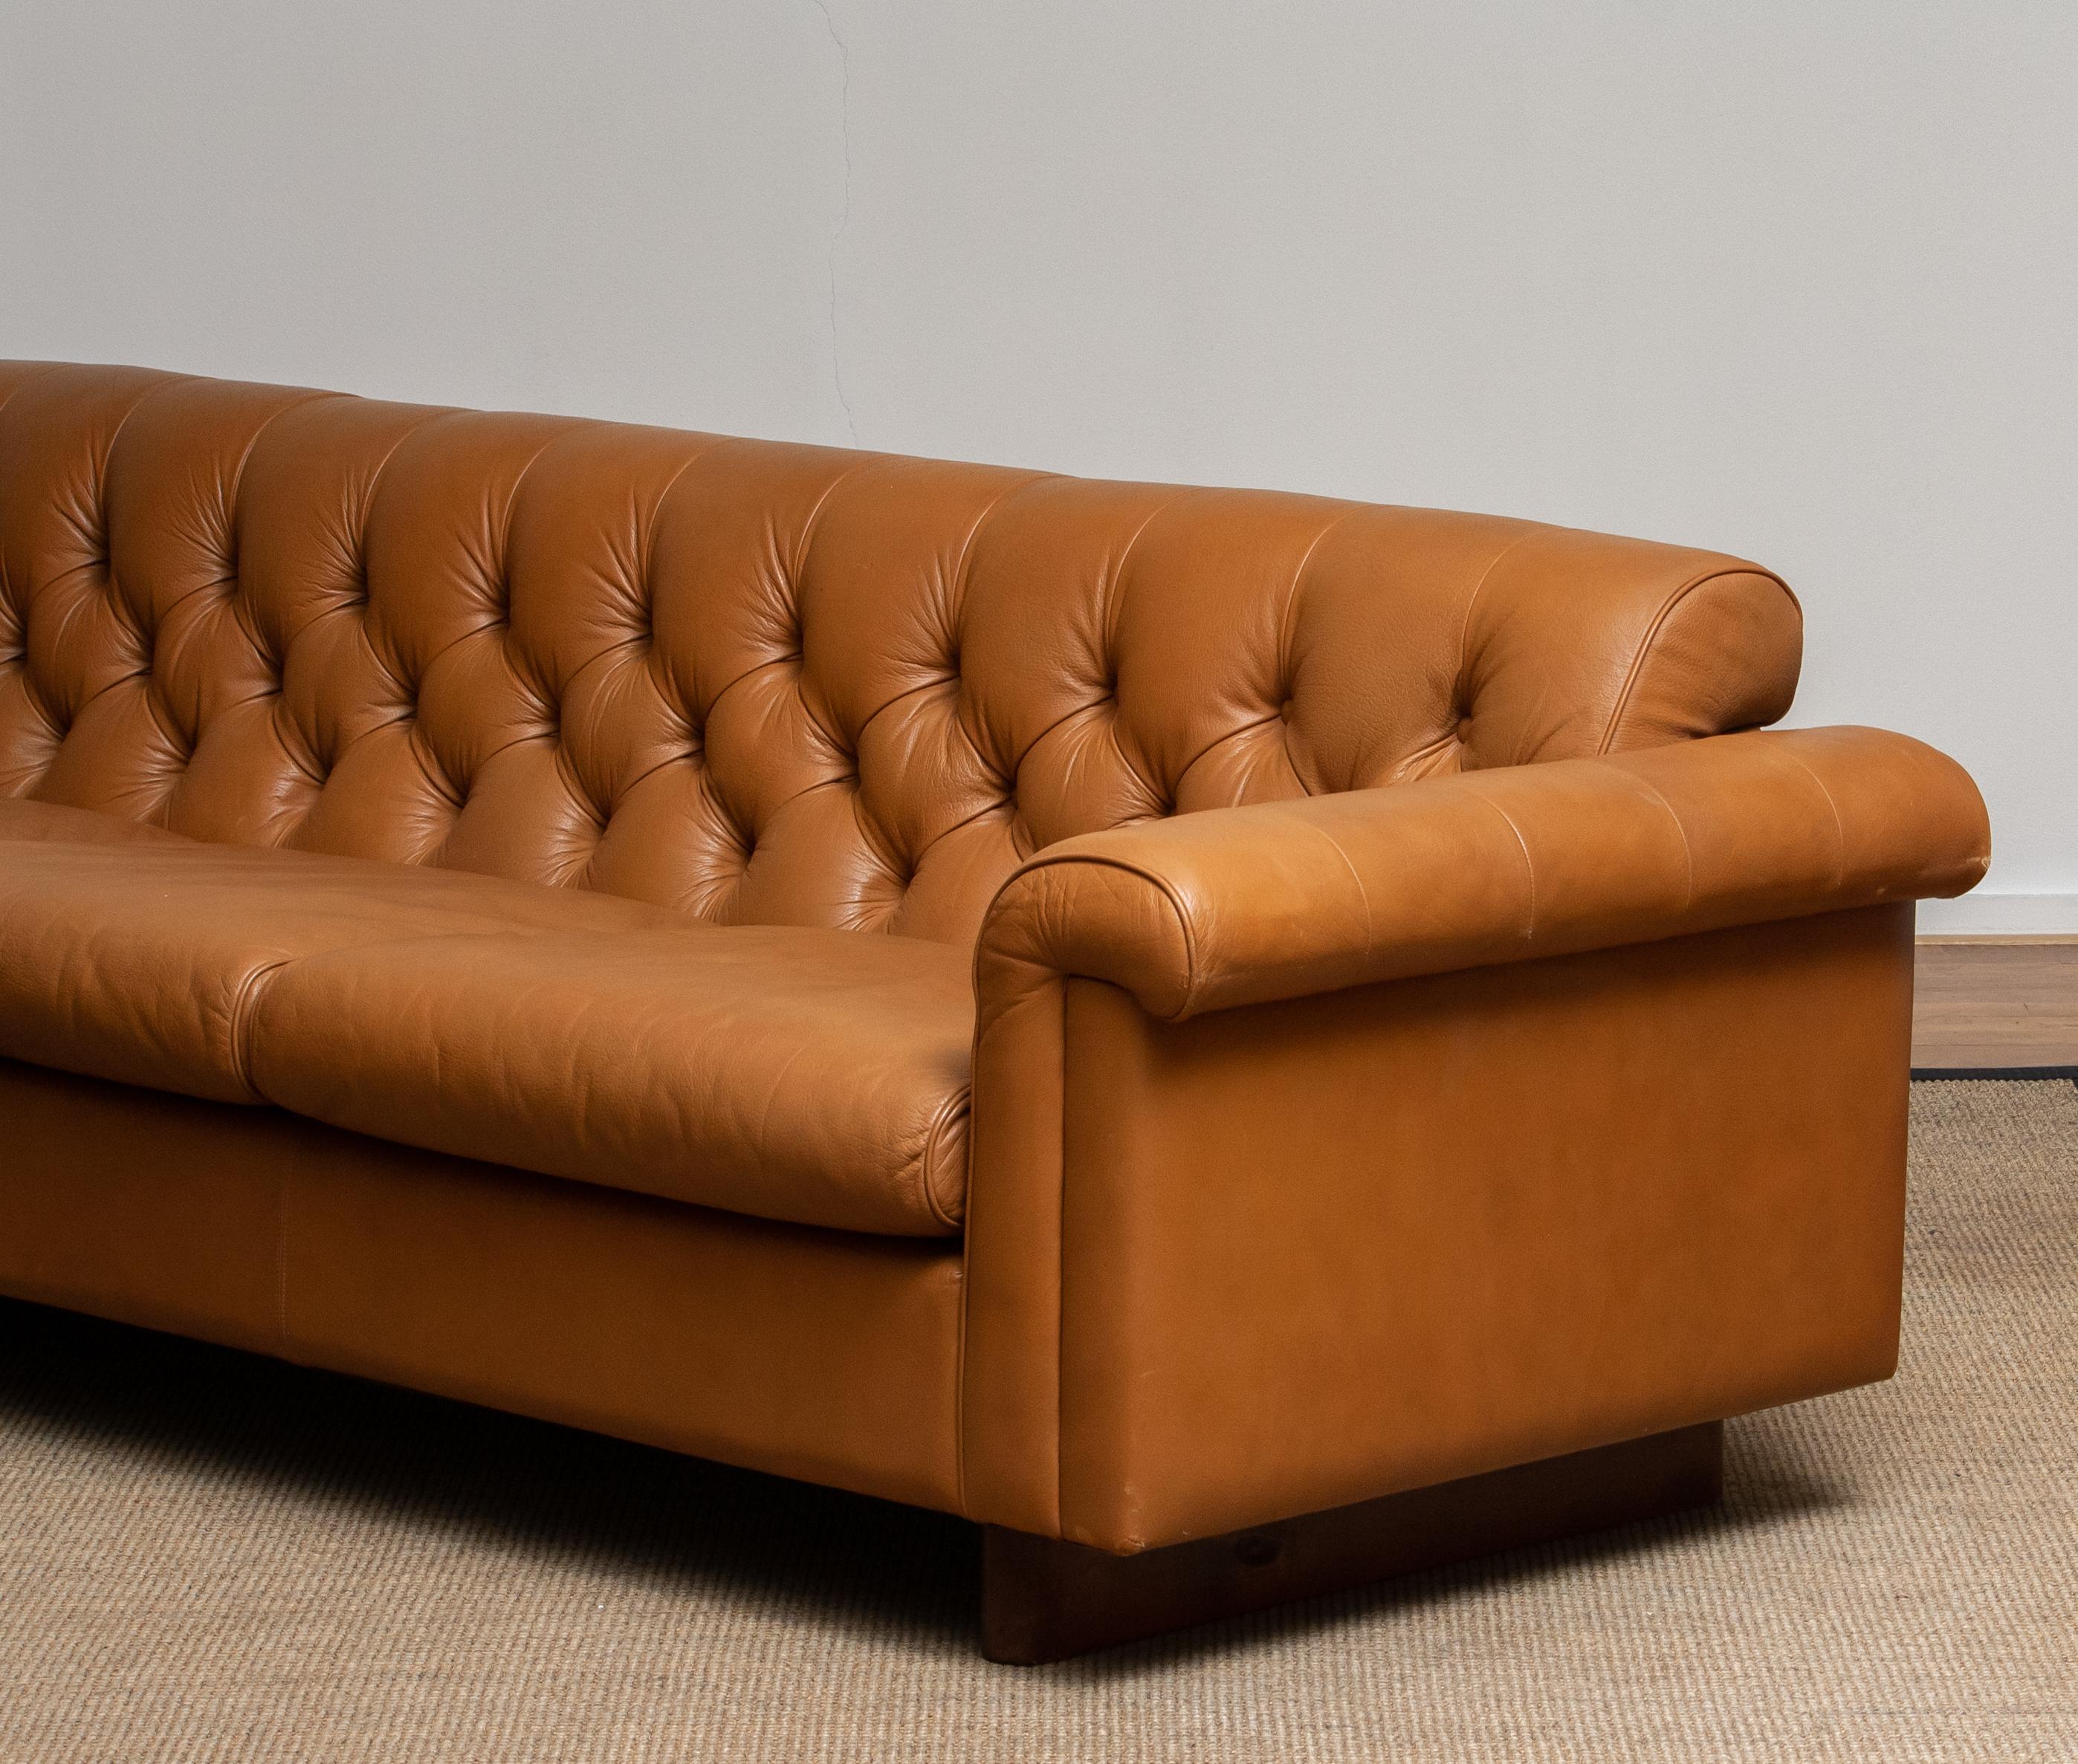 1970's Sofa by Karl Erik Ekselius for JOC Design in Camel Color Tufted Leather 4